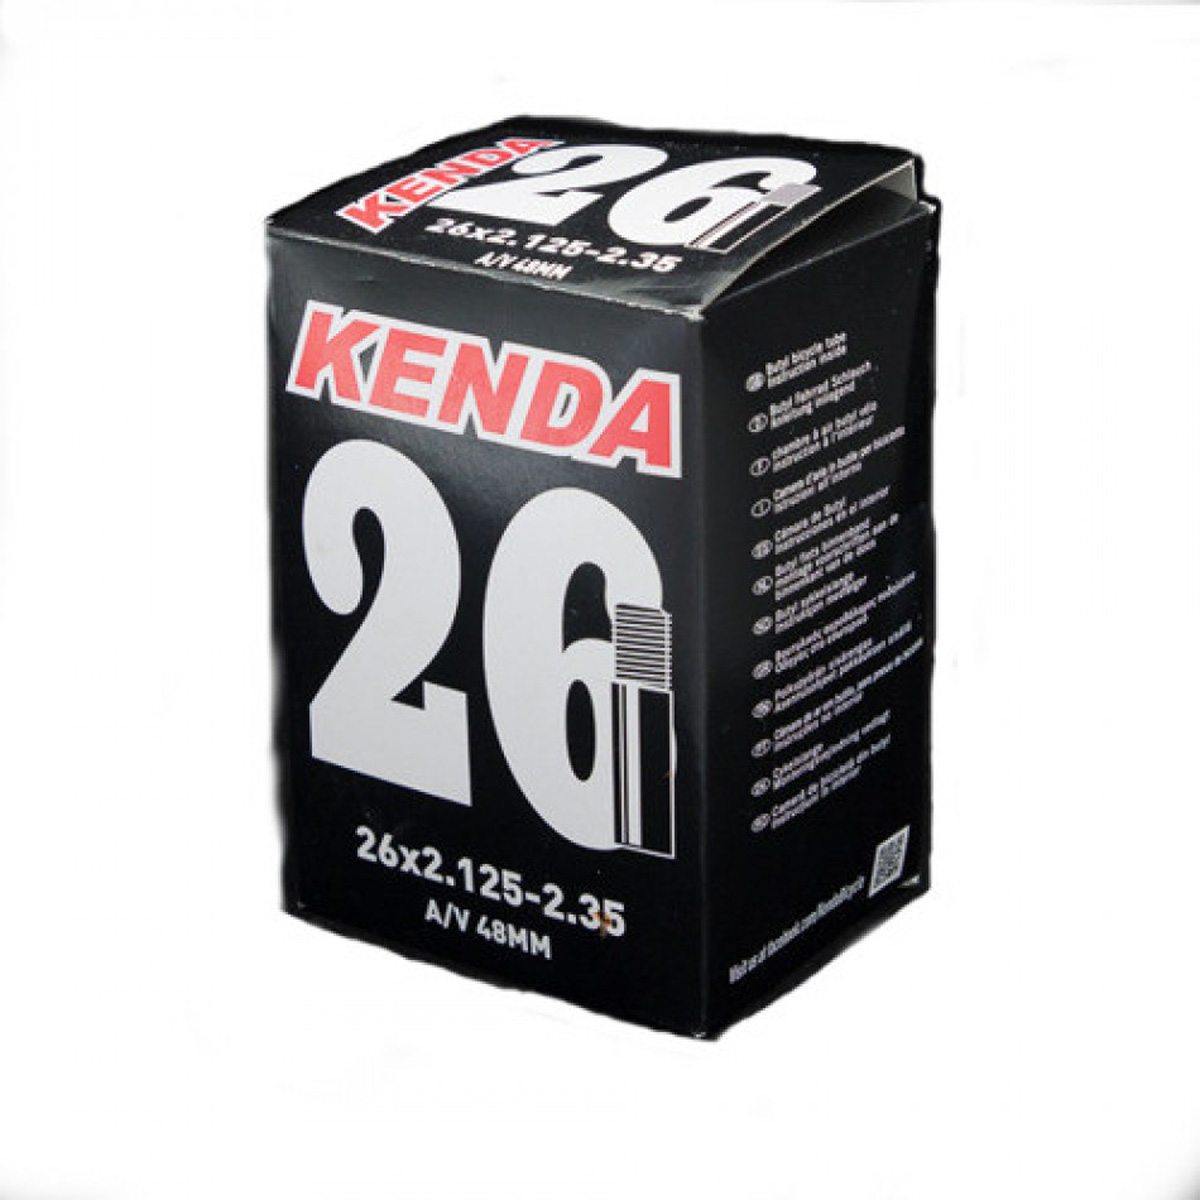 Велокамера Kenda 26'x2.125-2.35, Extreme 0, 87 мм a/v